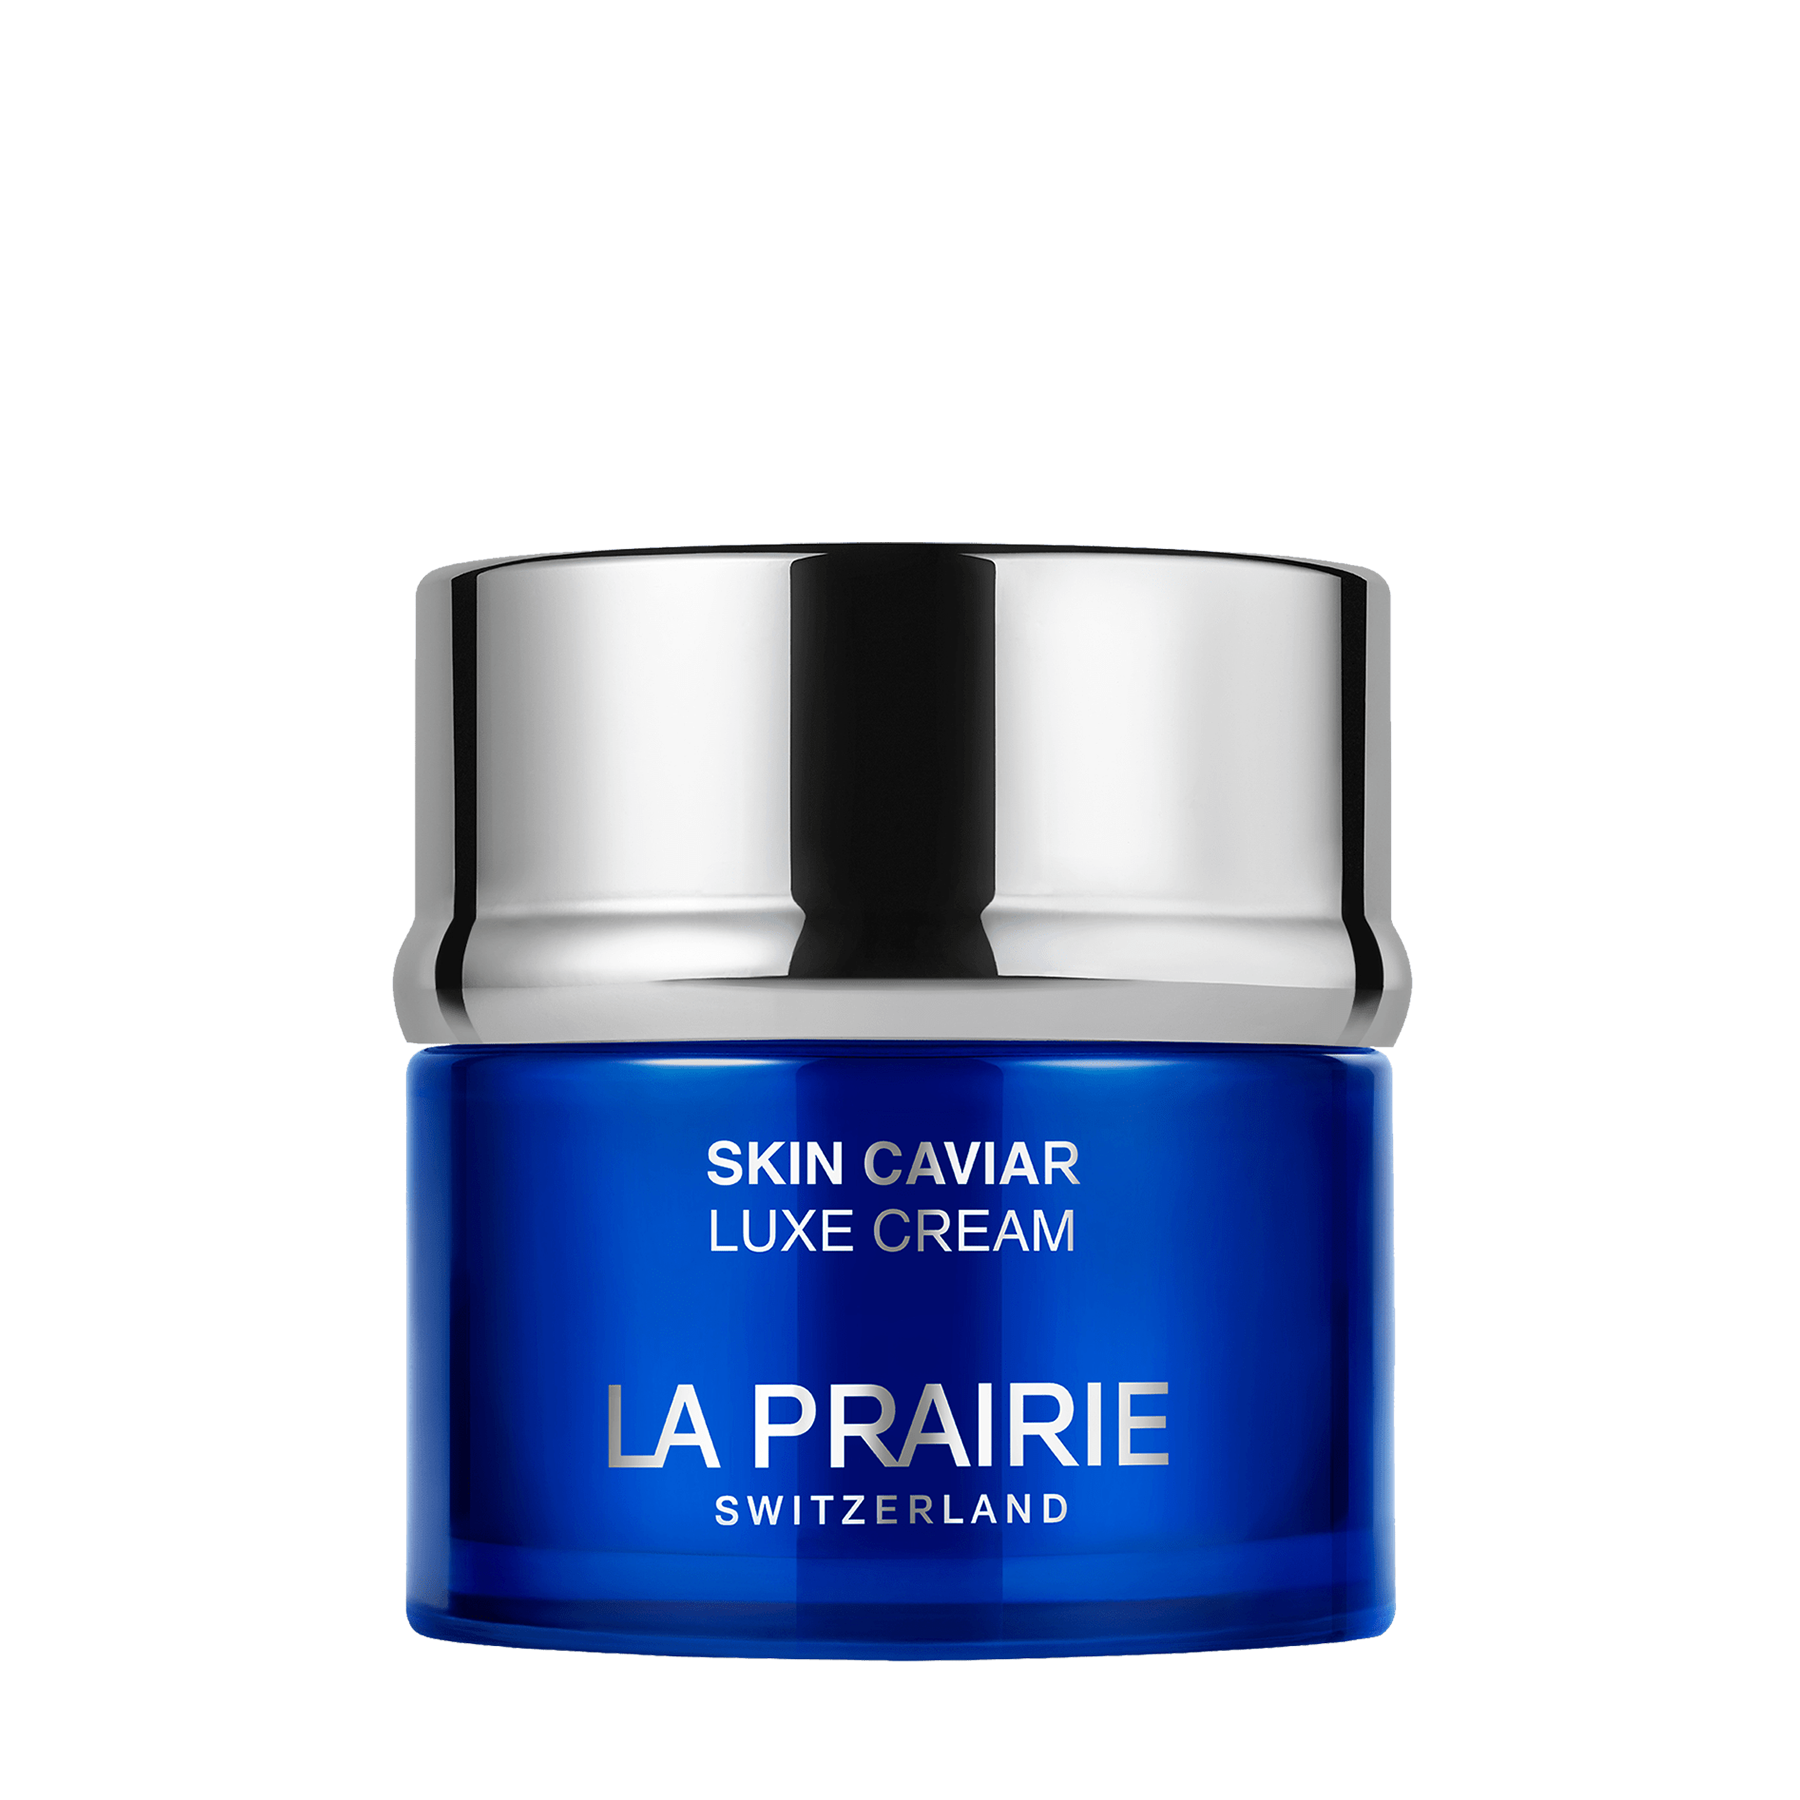 La Prairie Skin Caviar Luxe Cream | Lifting & Firming Cream